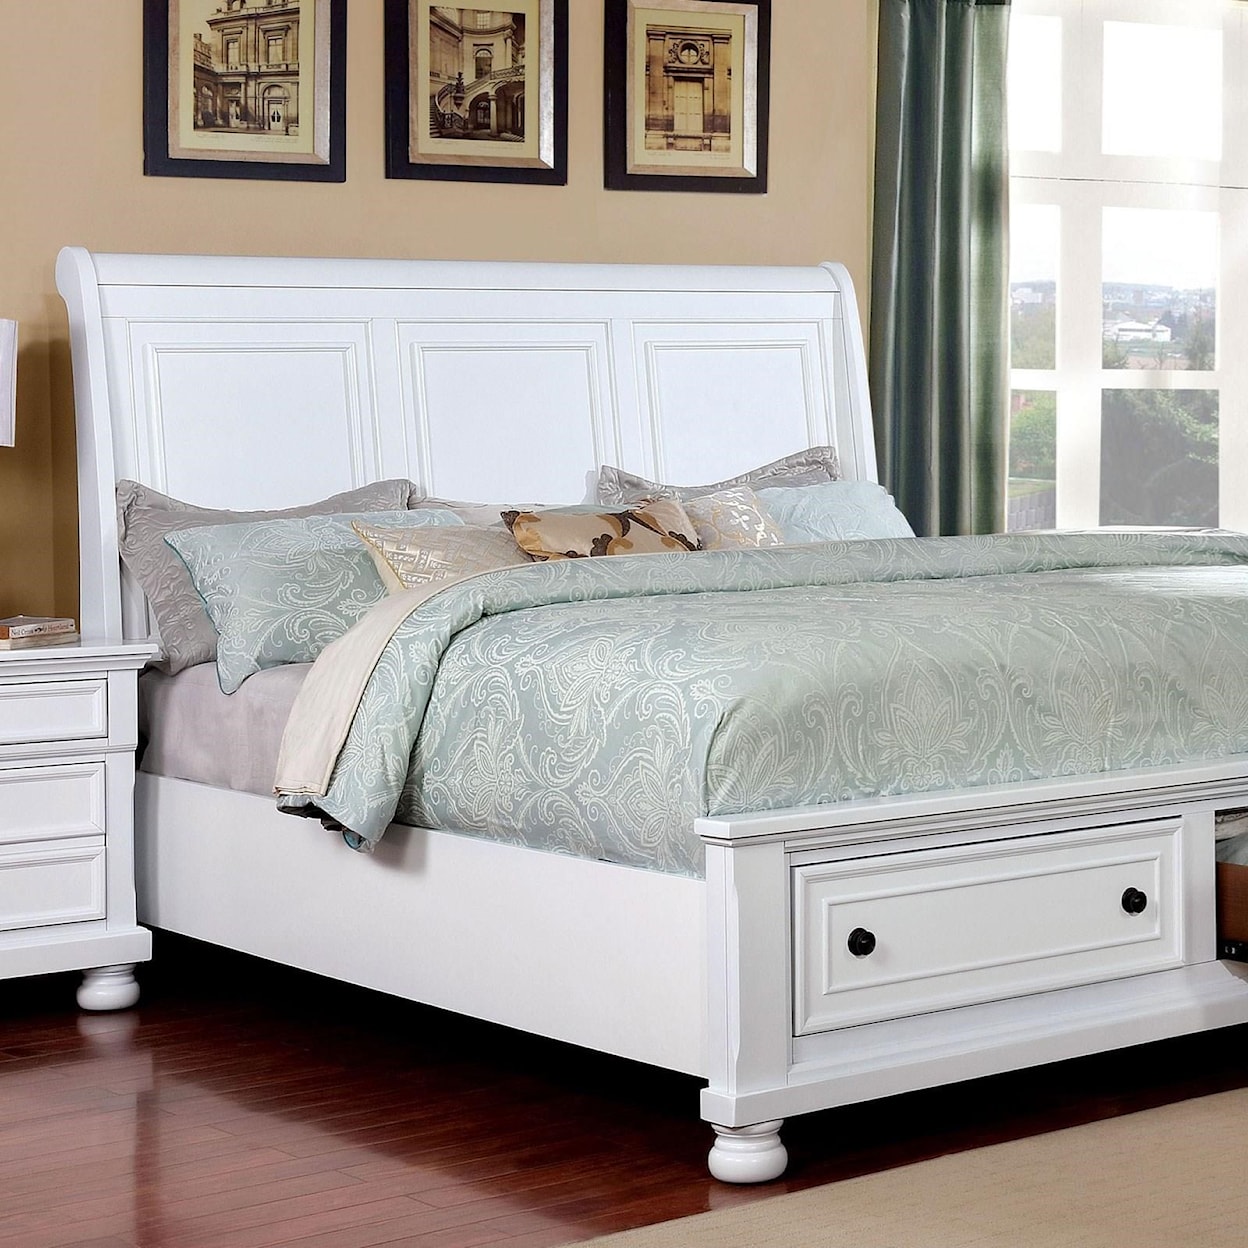 FUSA Castor California King Bed